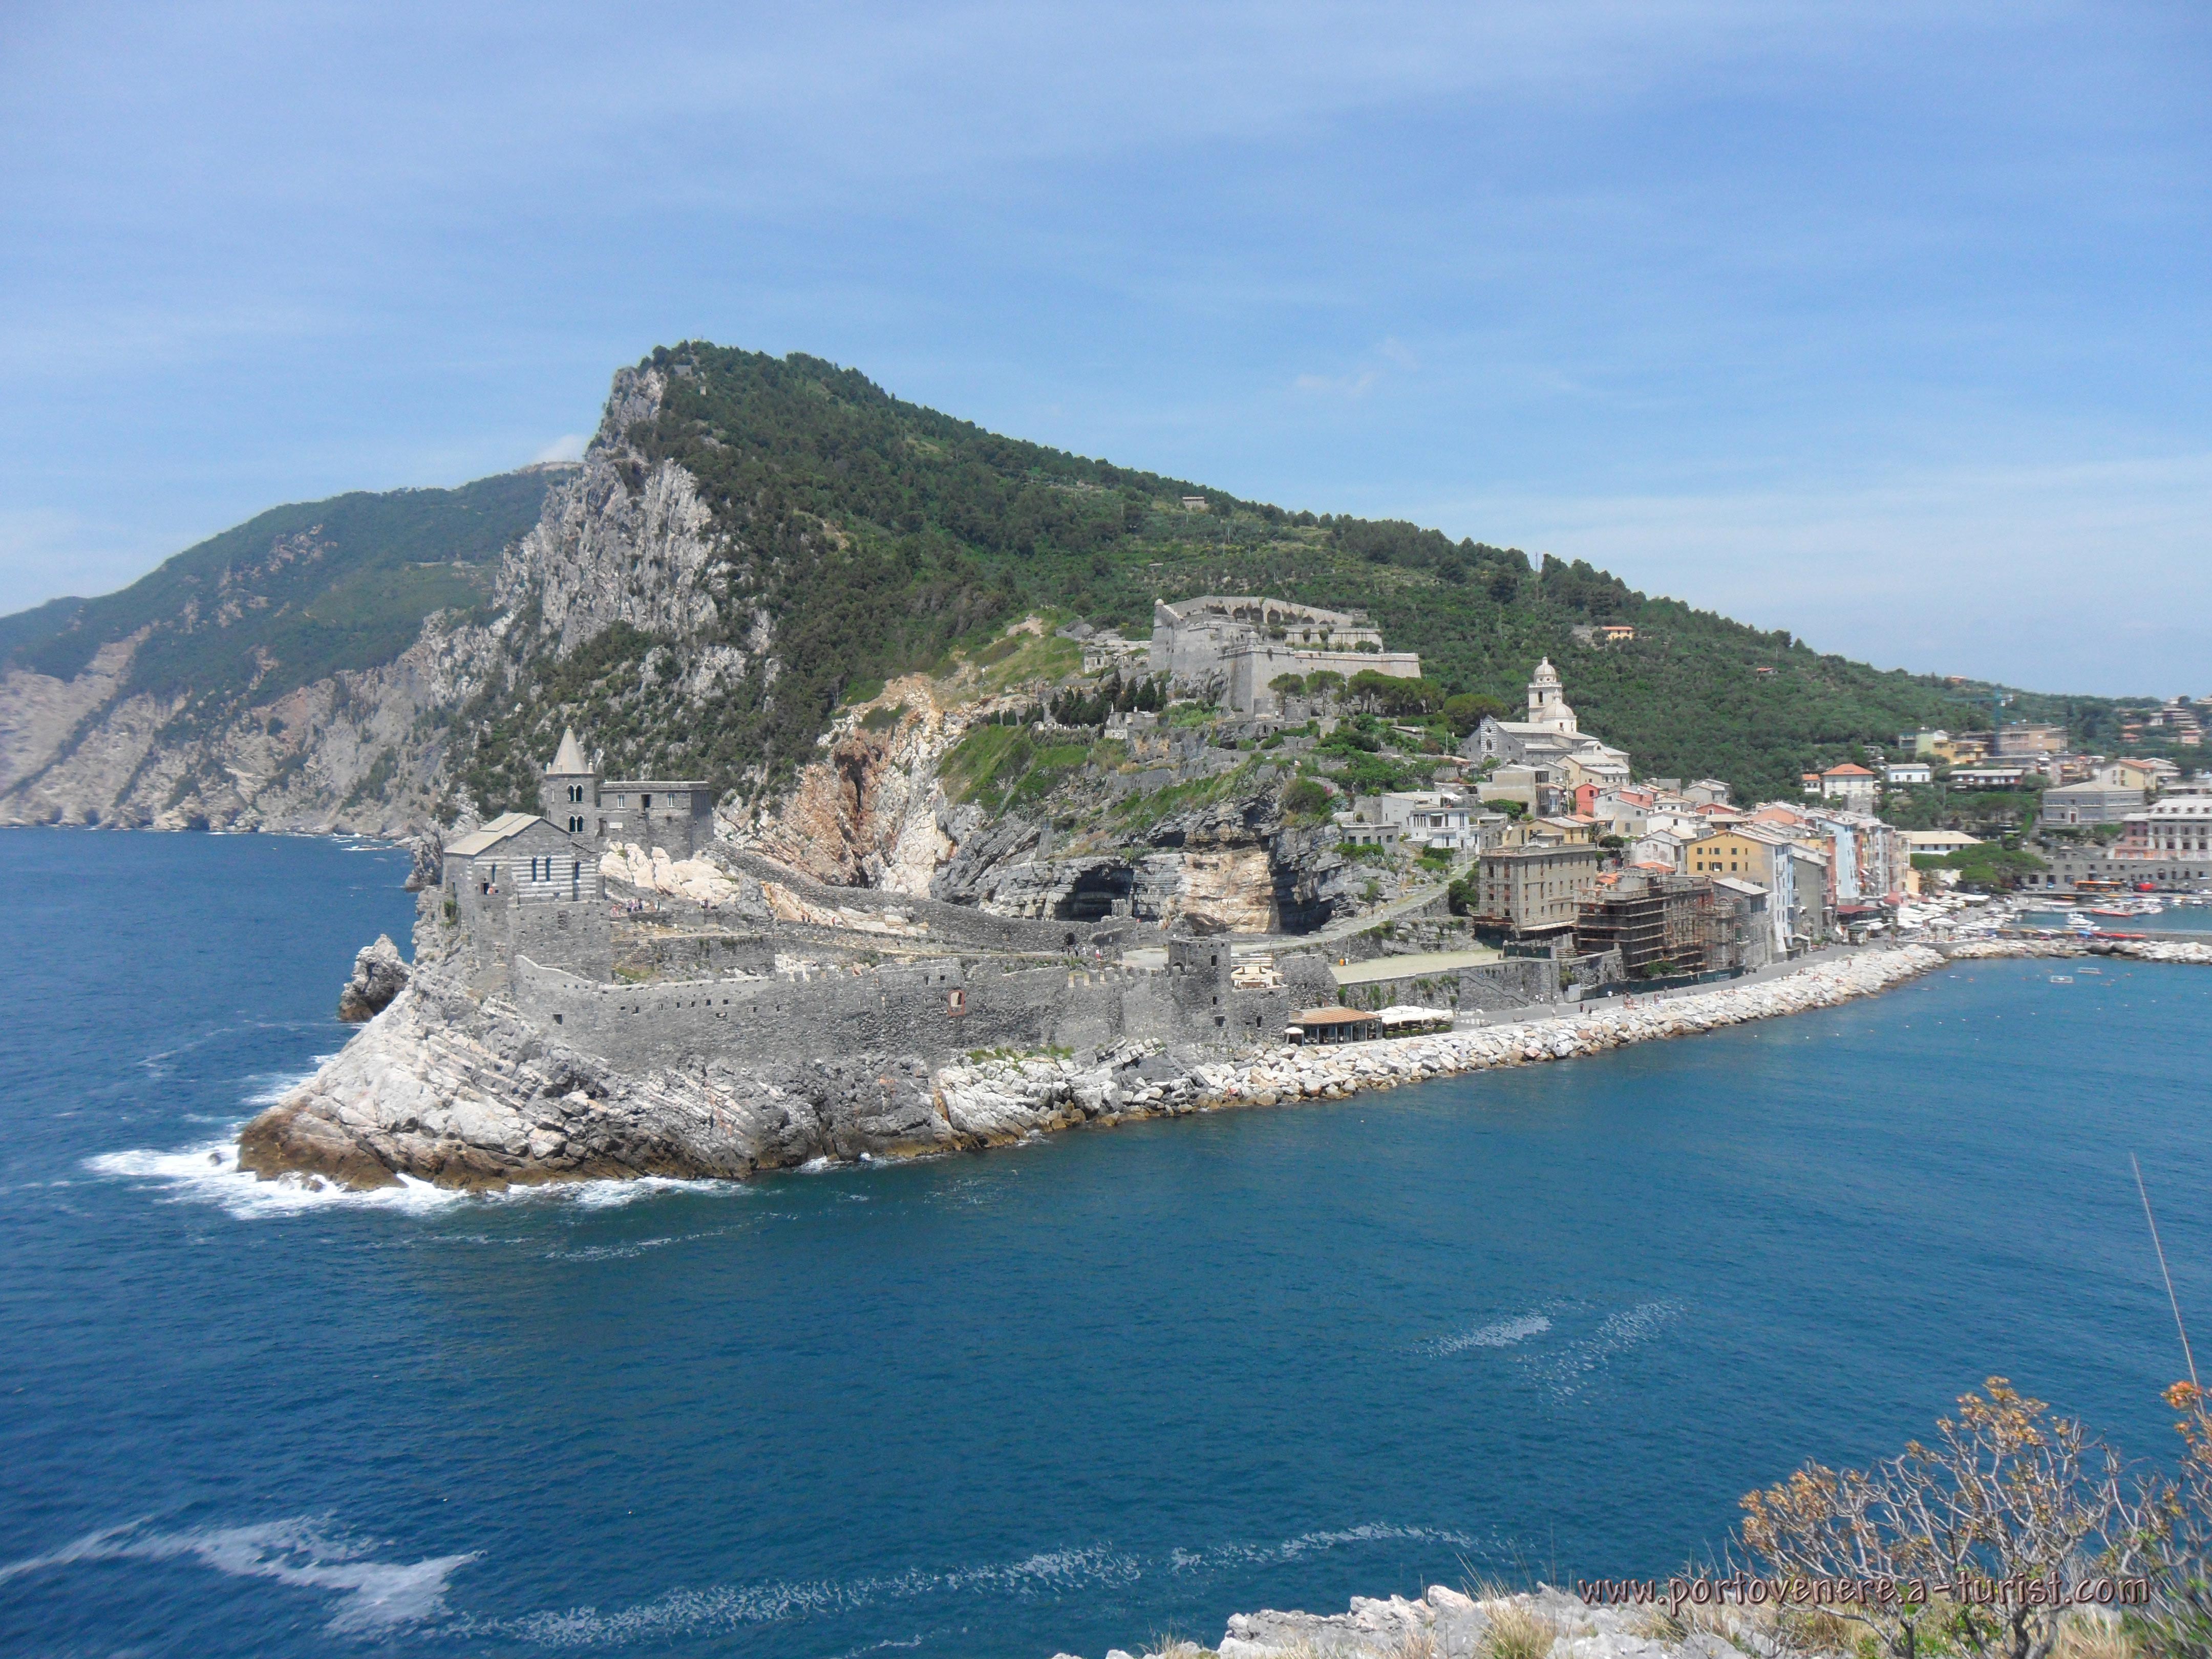 Palmaria Island - The landscape view of Portovenere<br>4320x3240, 1.81 MB